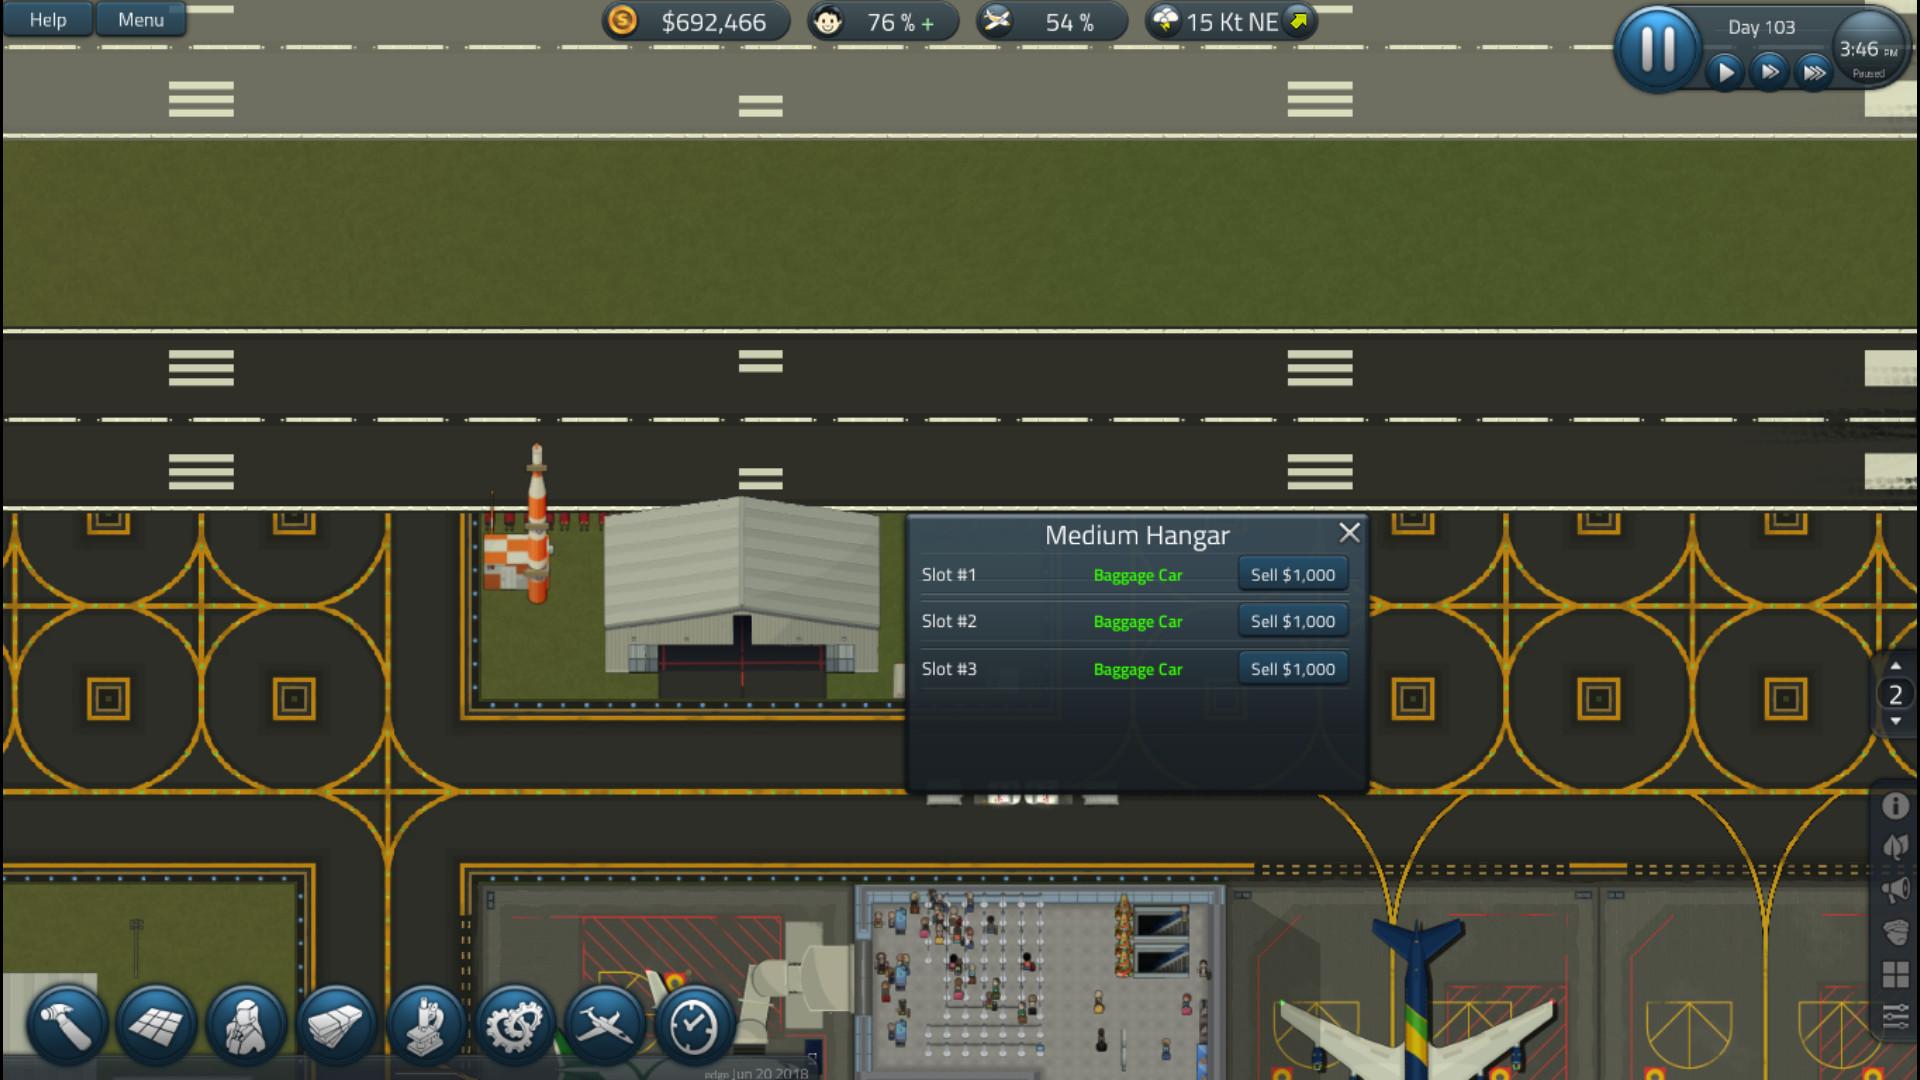 Screenshot №25 from game SimAirport